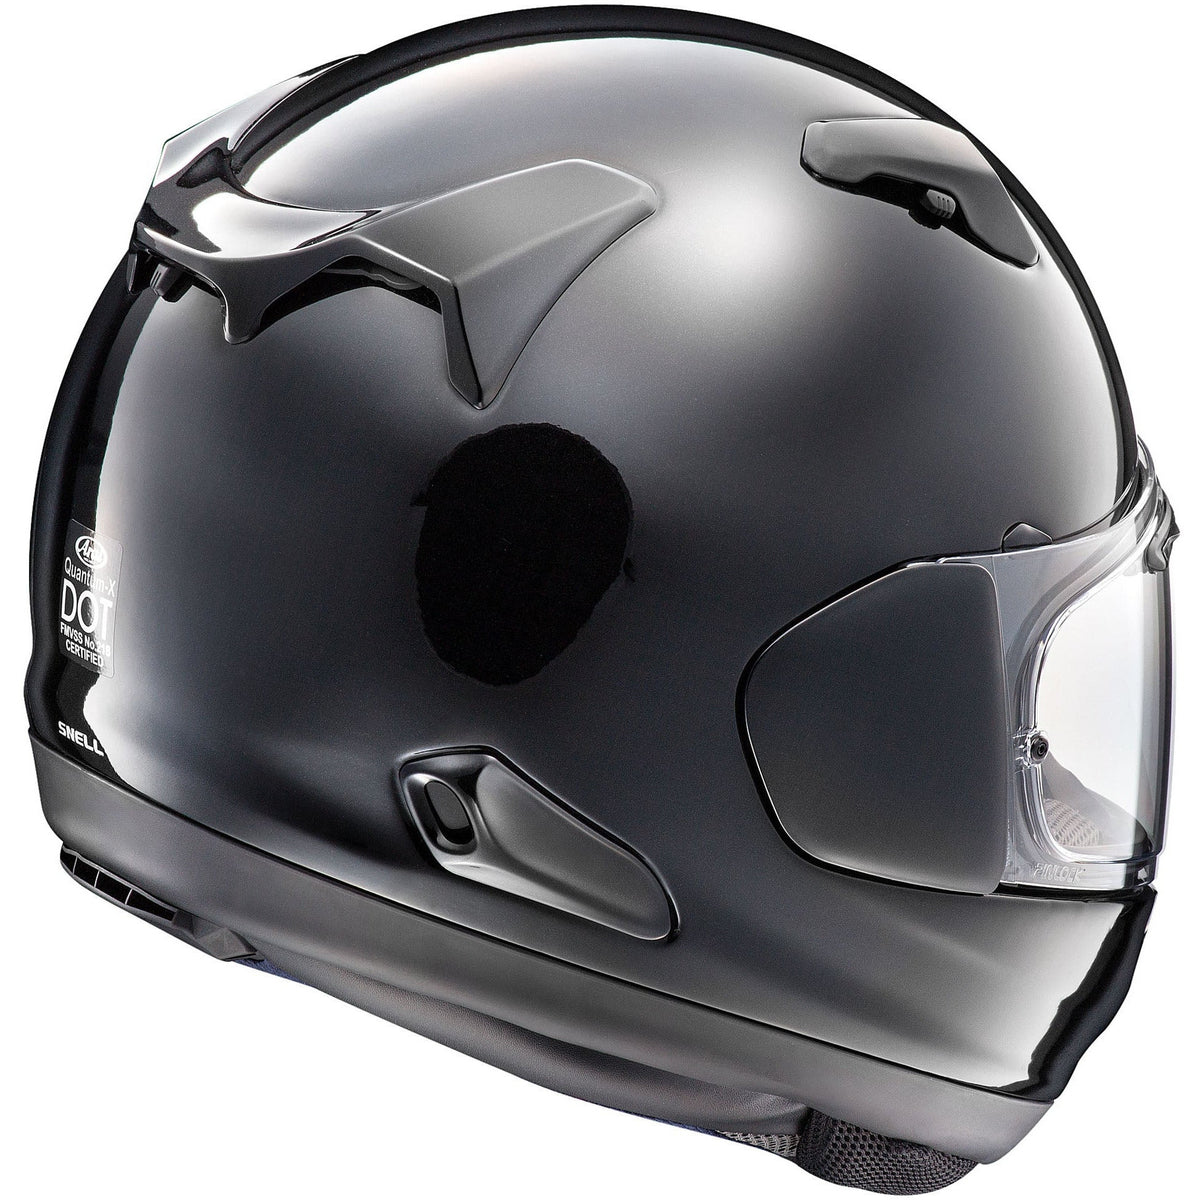 Quantum-X Helmet (Diamond Black)